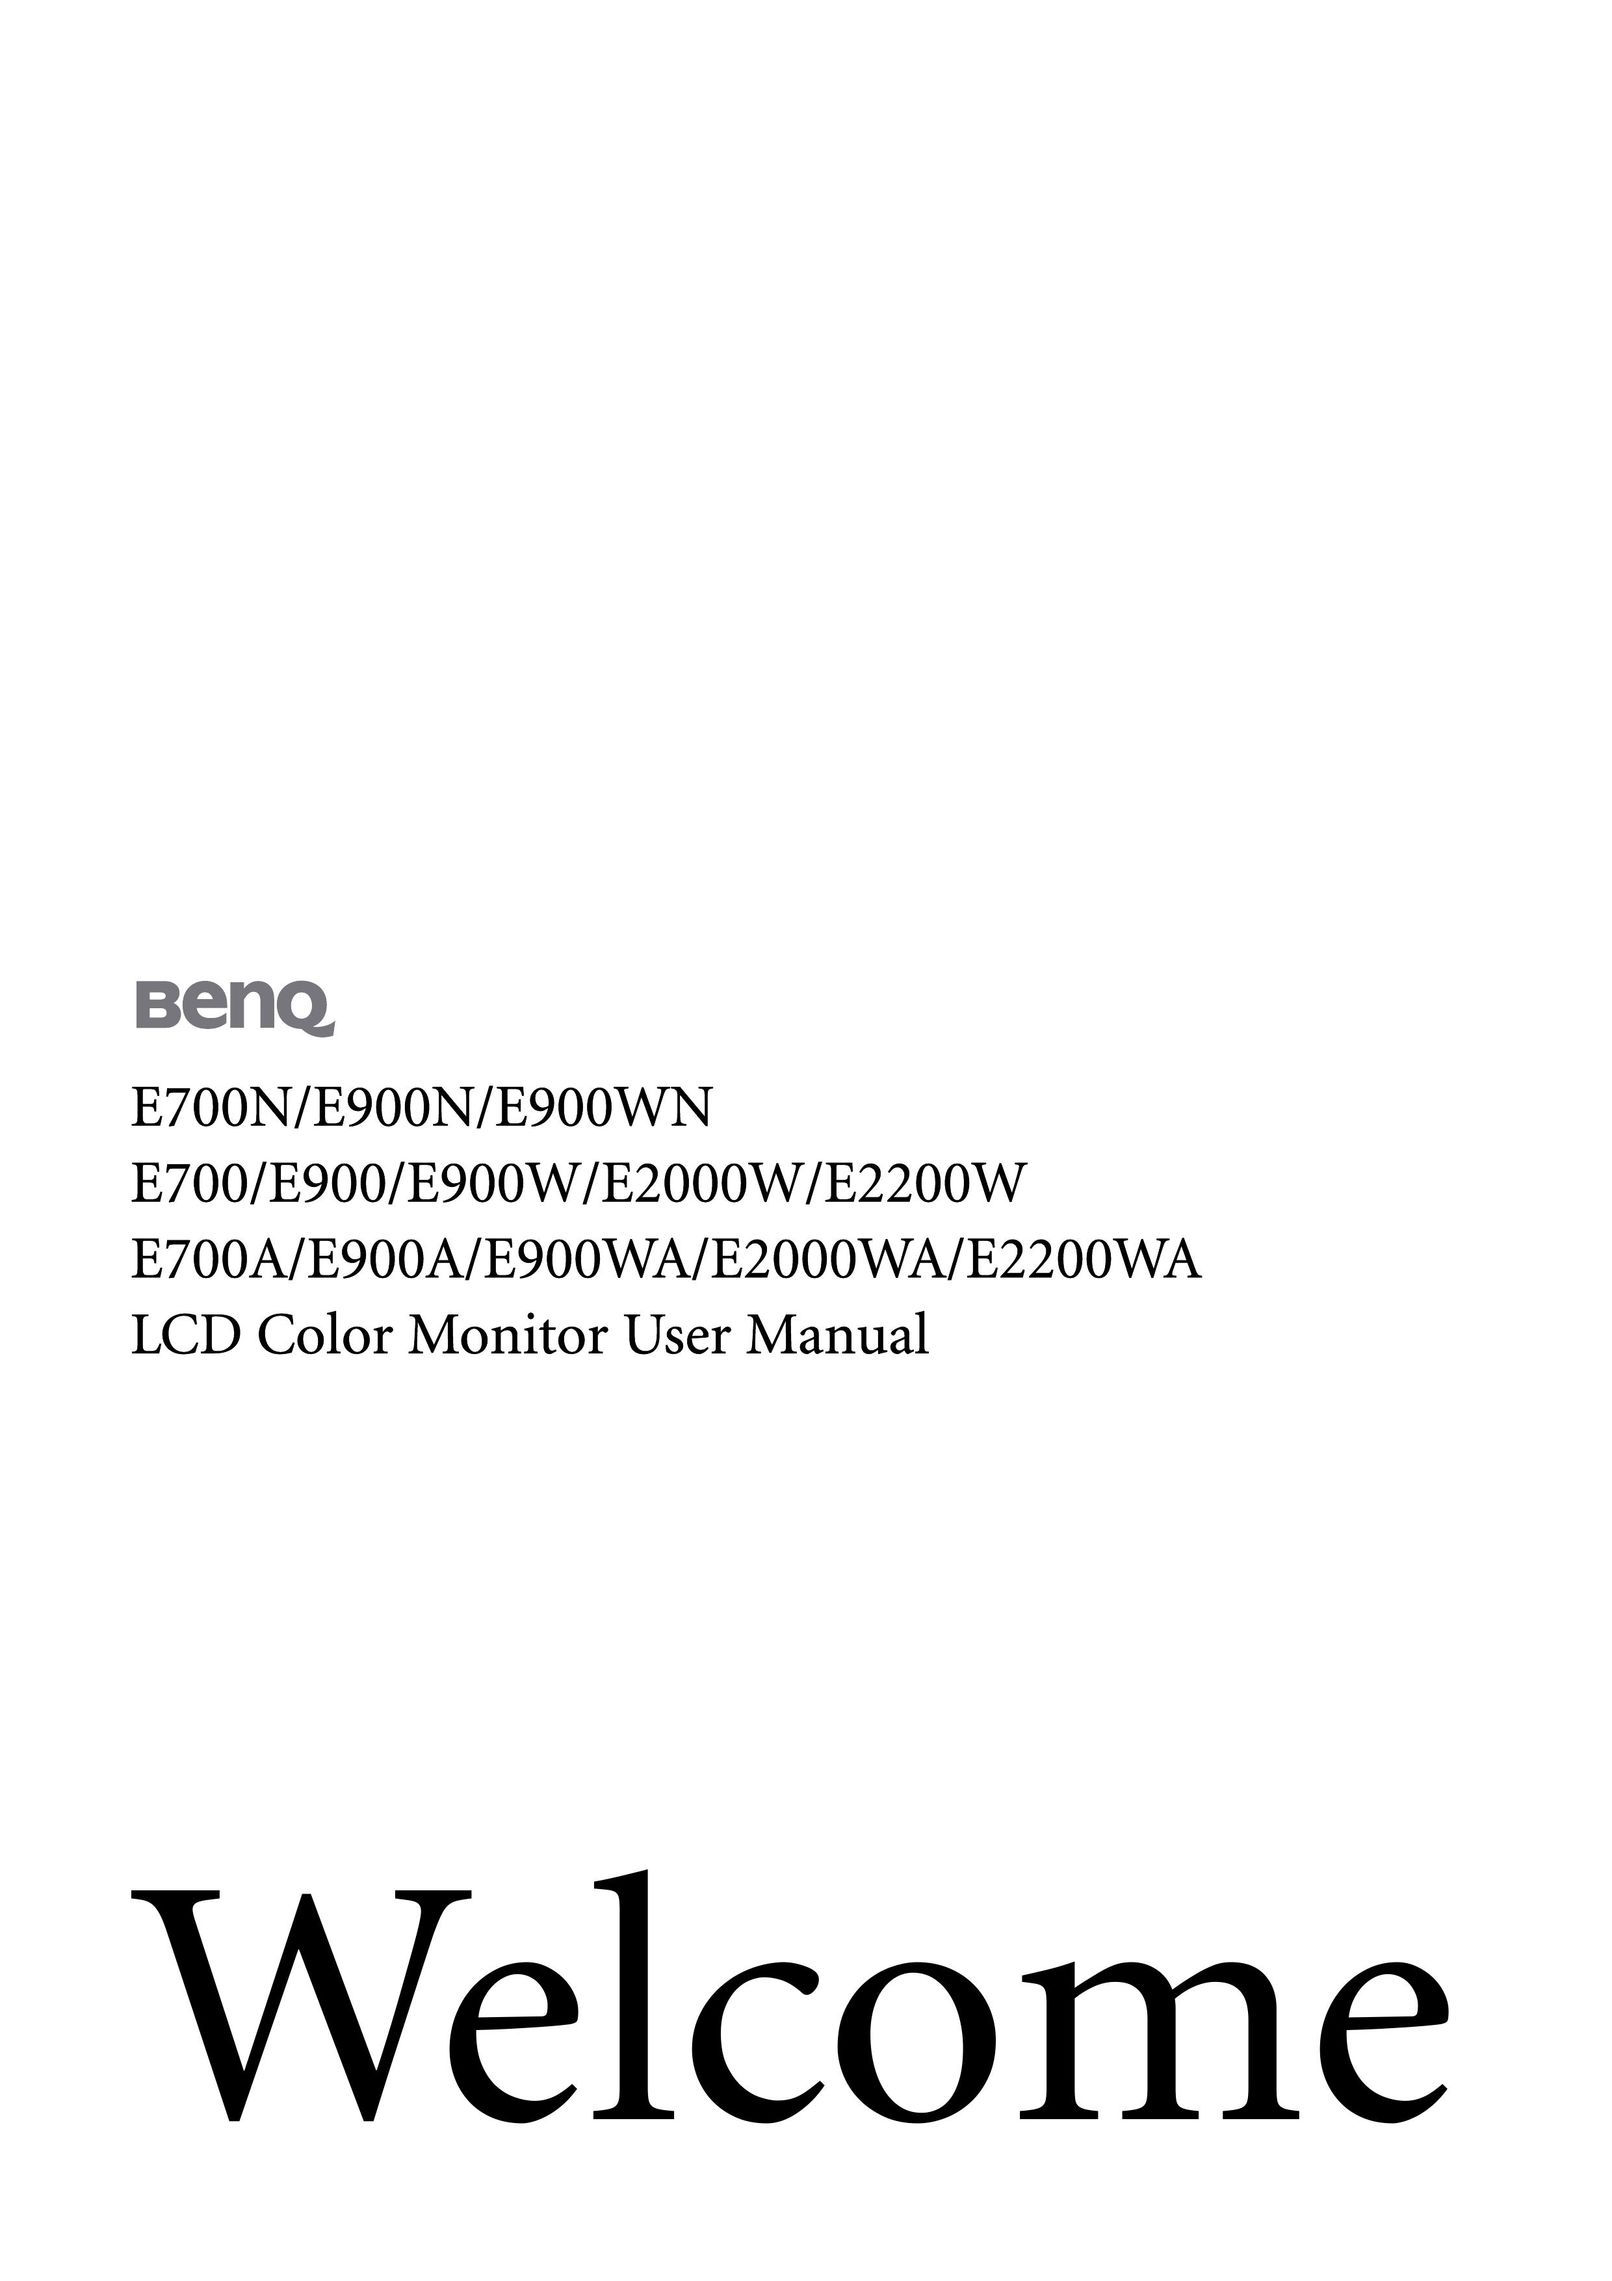 BenQ E900N Computer Monitor User Manual (Page 1)